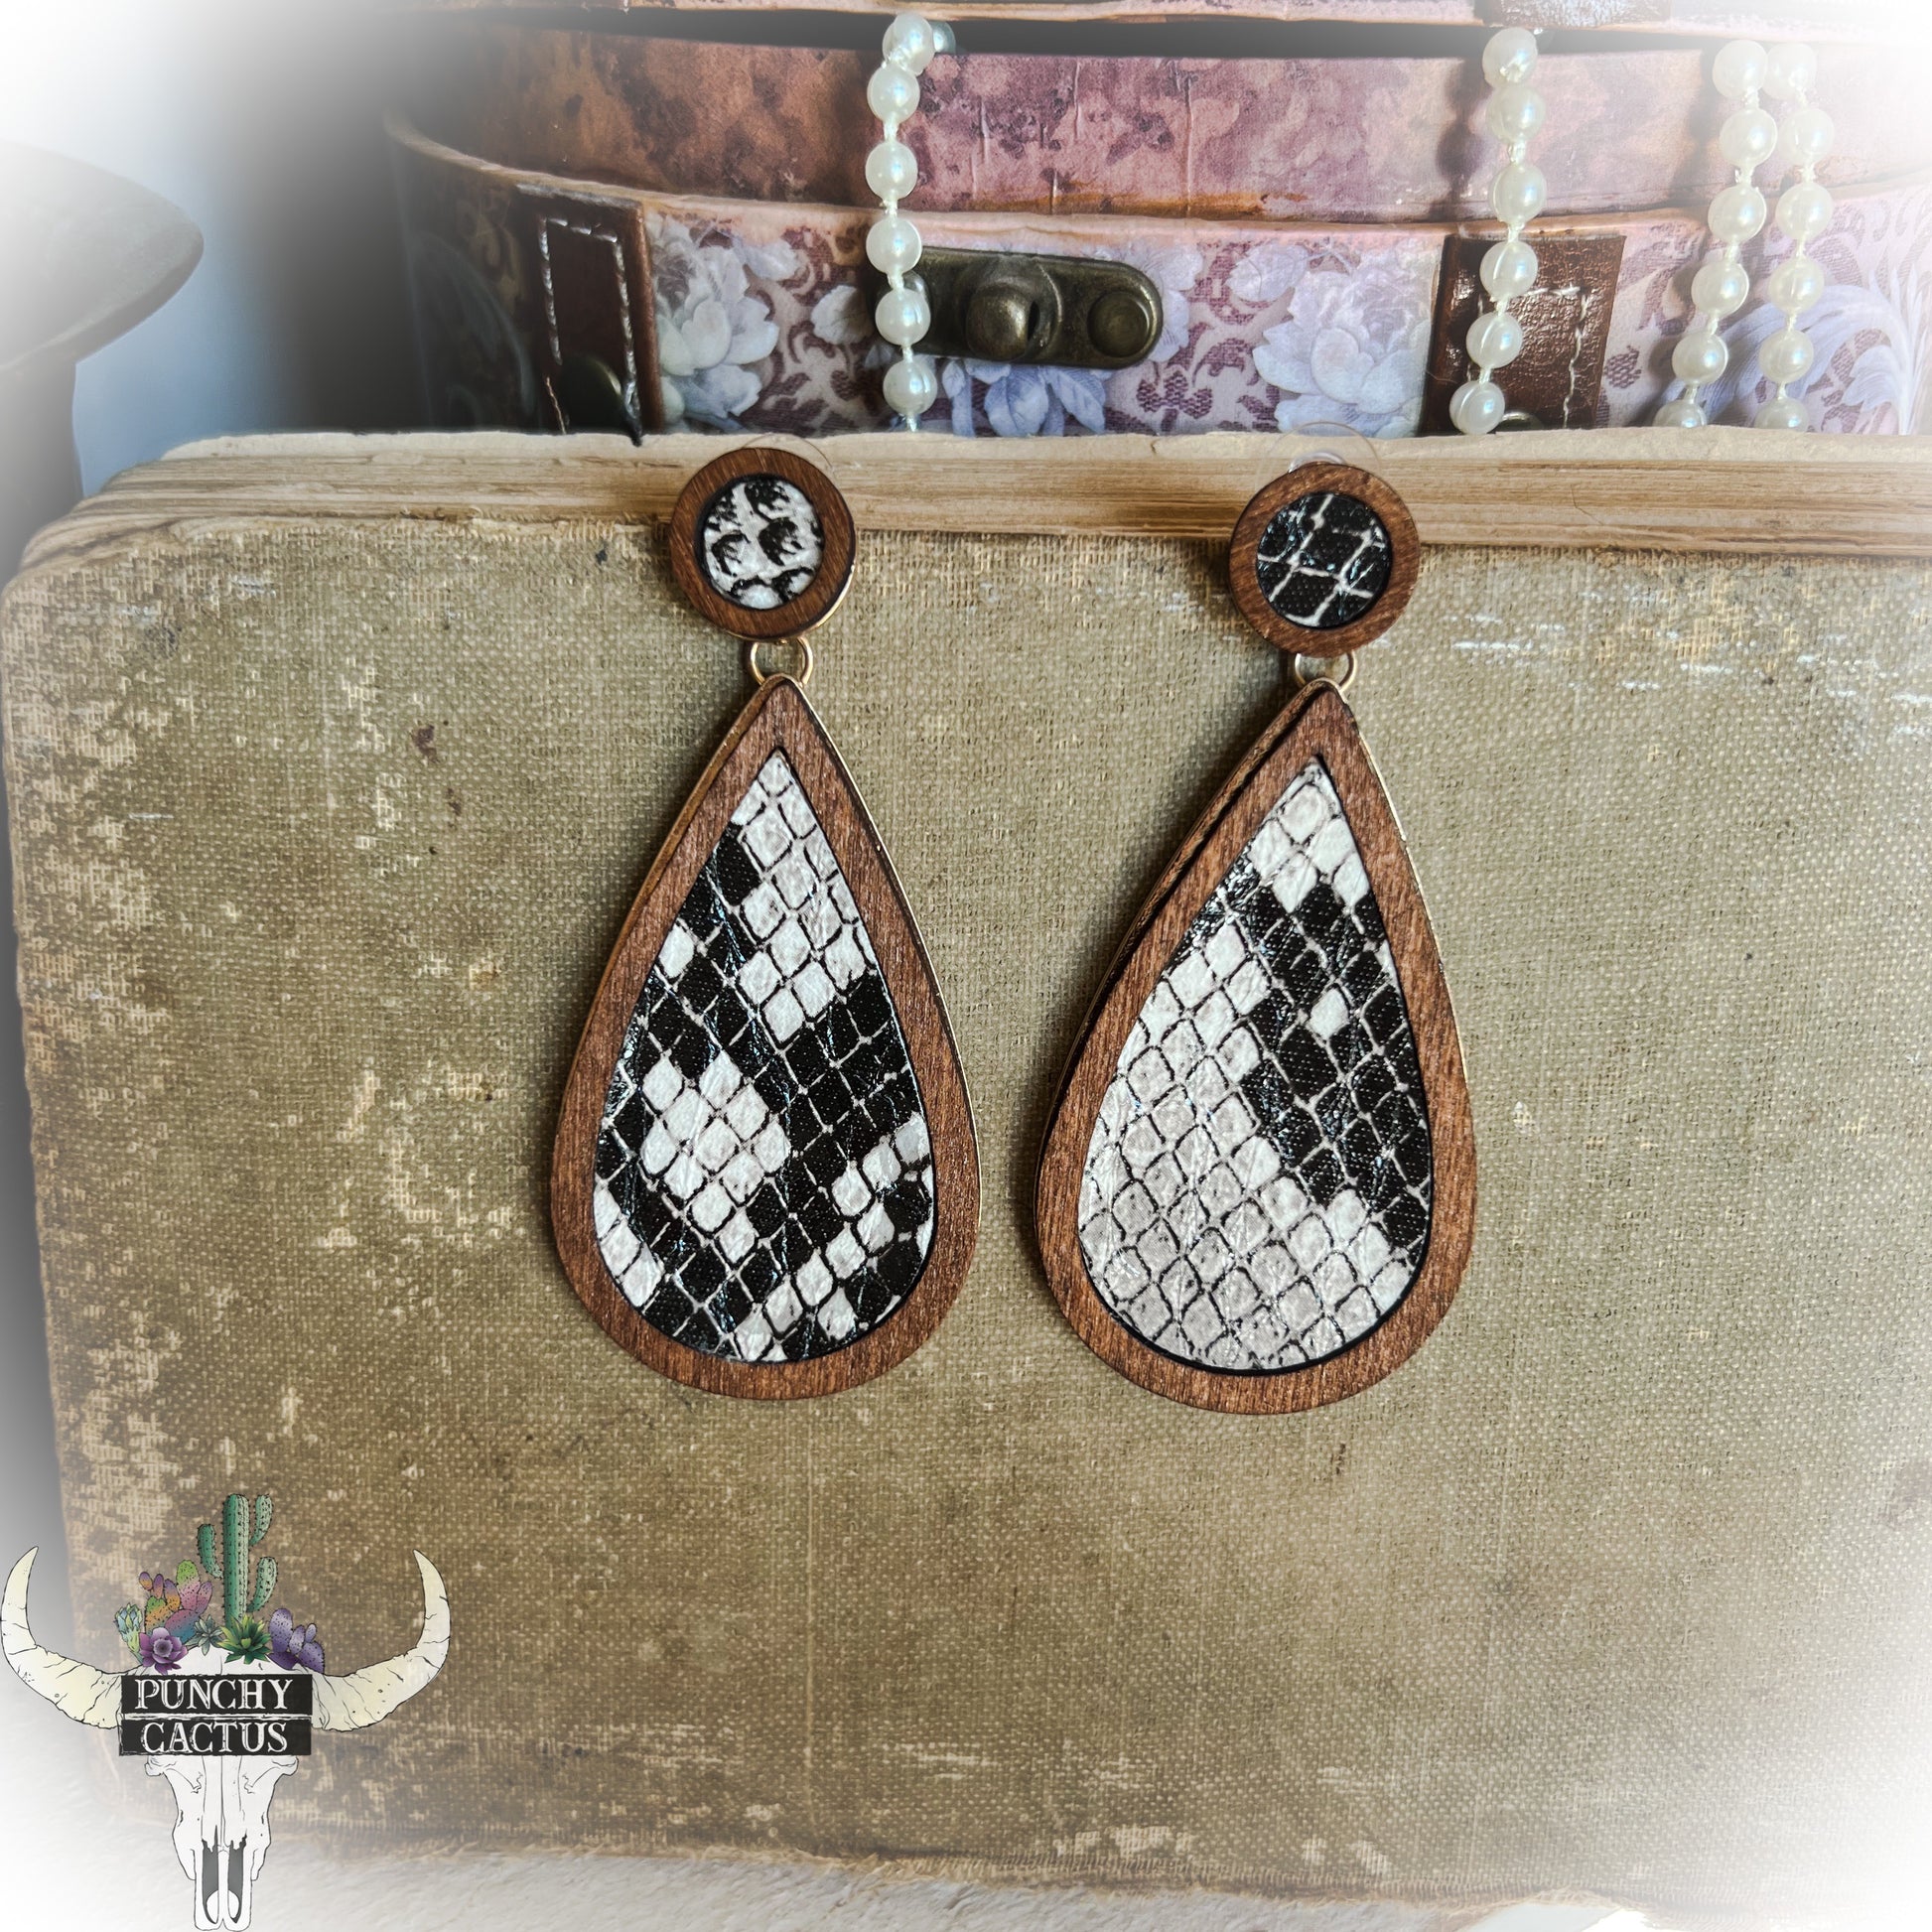 wood earrings with black and white snake print earrings